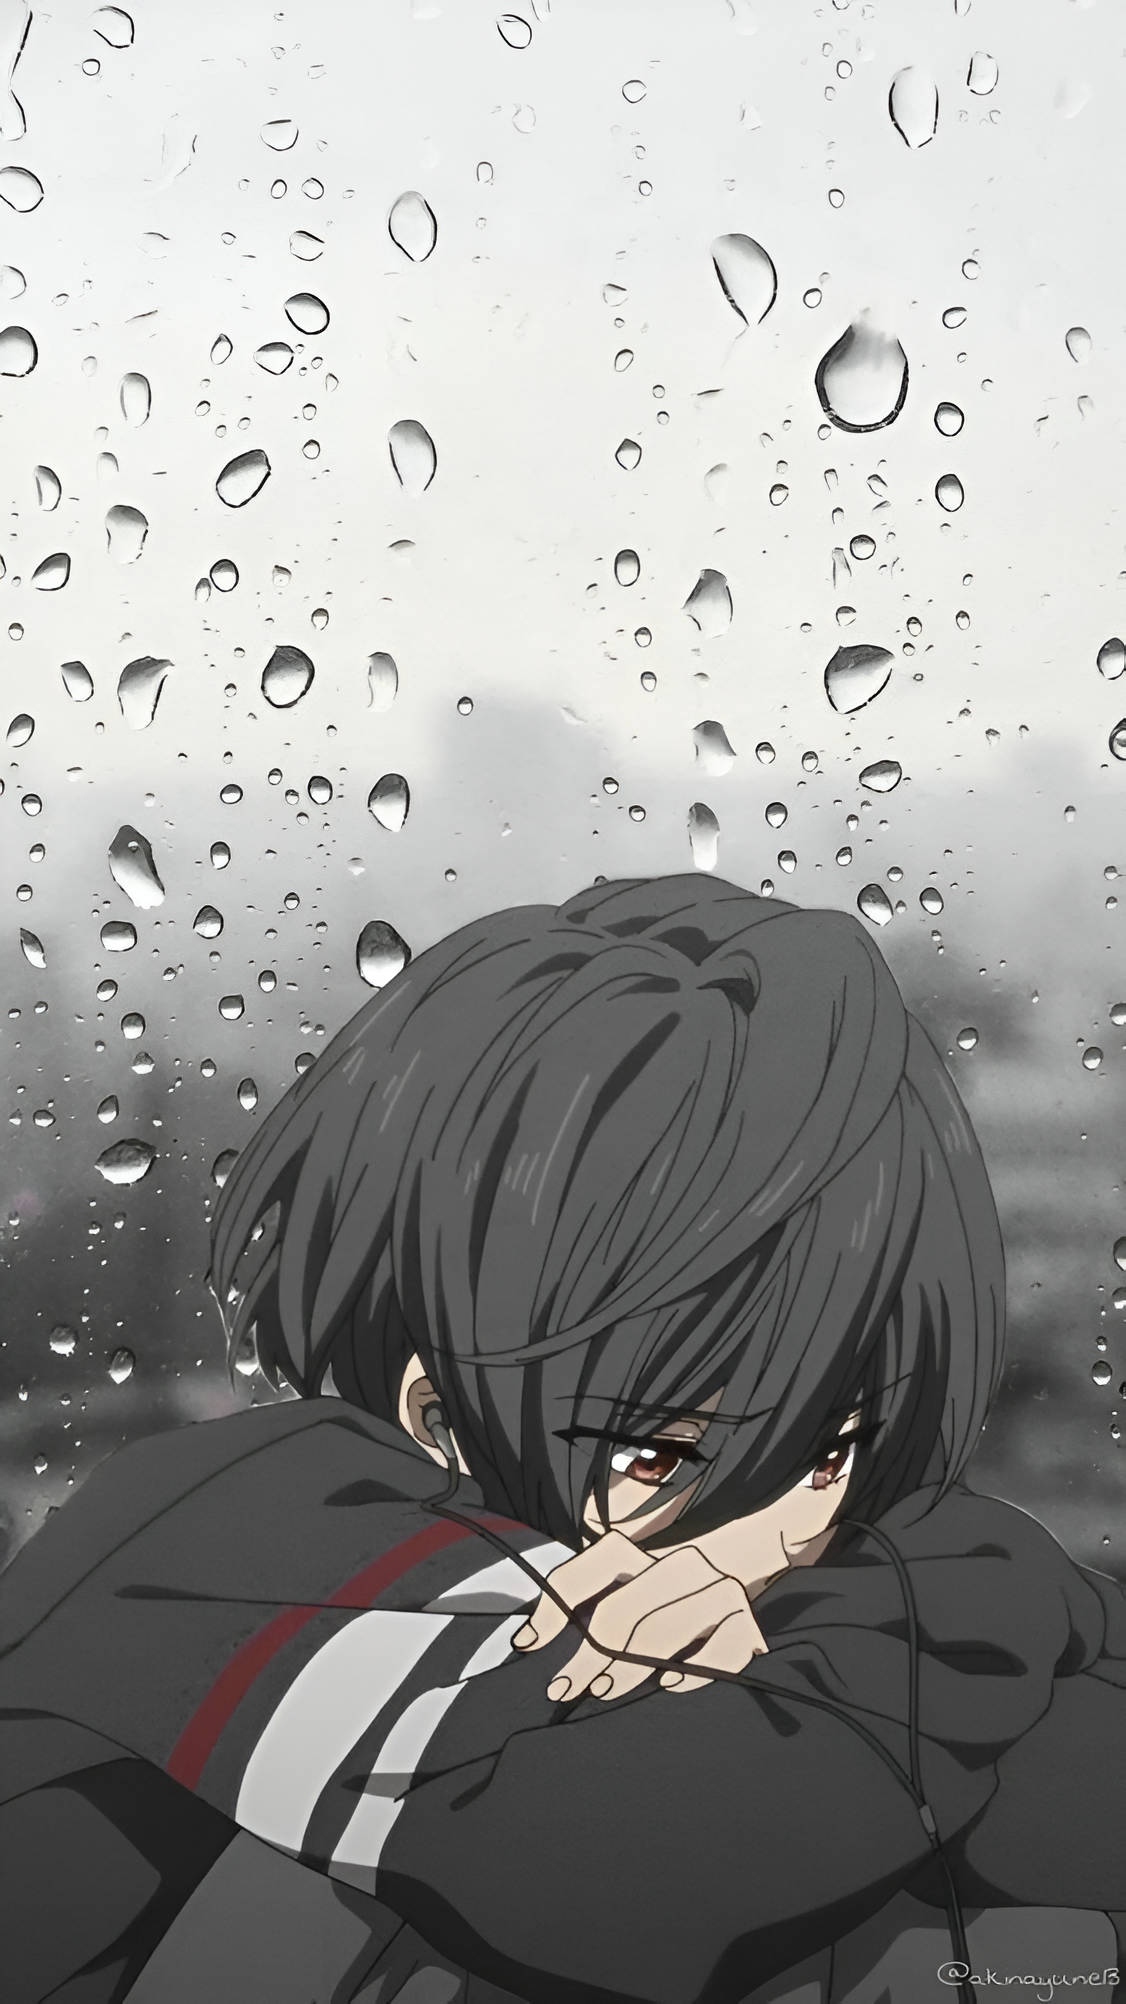 Broken Heart Sad Anime Boy - Waterdrops Background